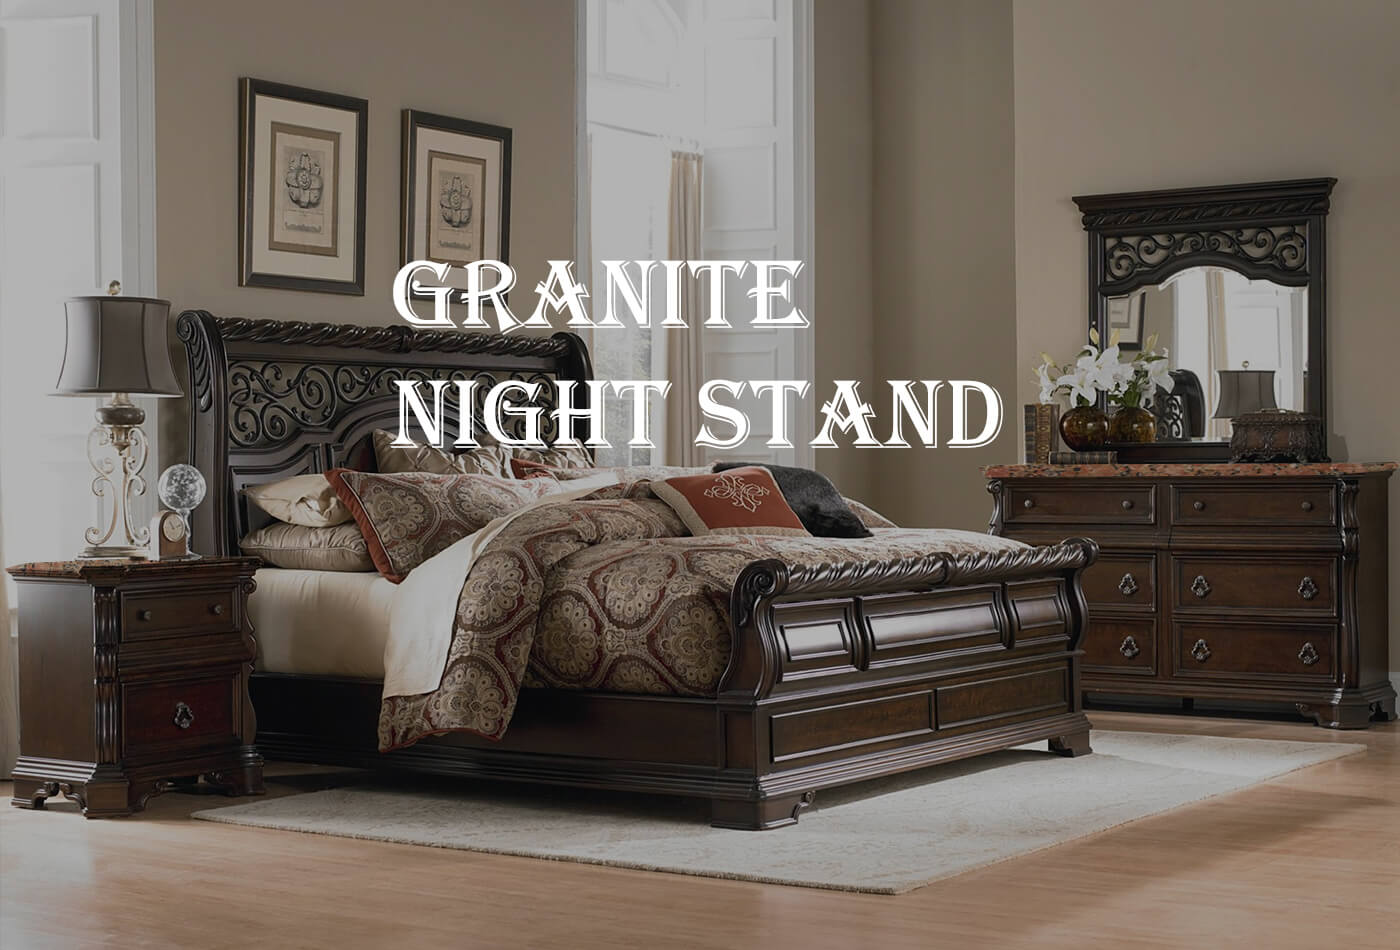 Granite Night Stand: Durable & Stylish Bedroom Furniture